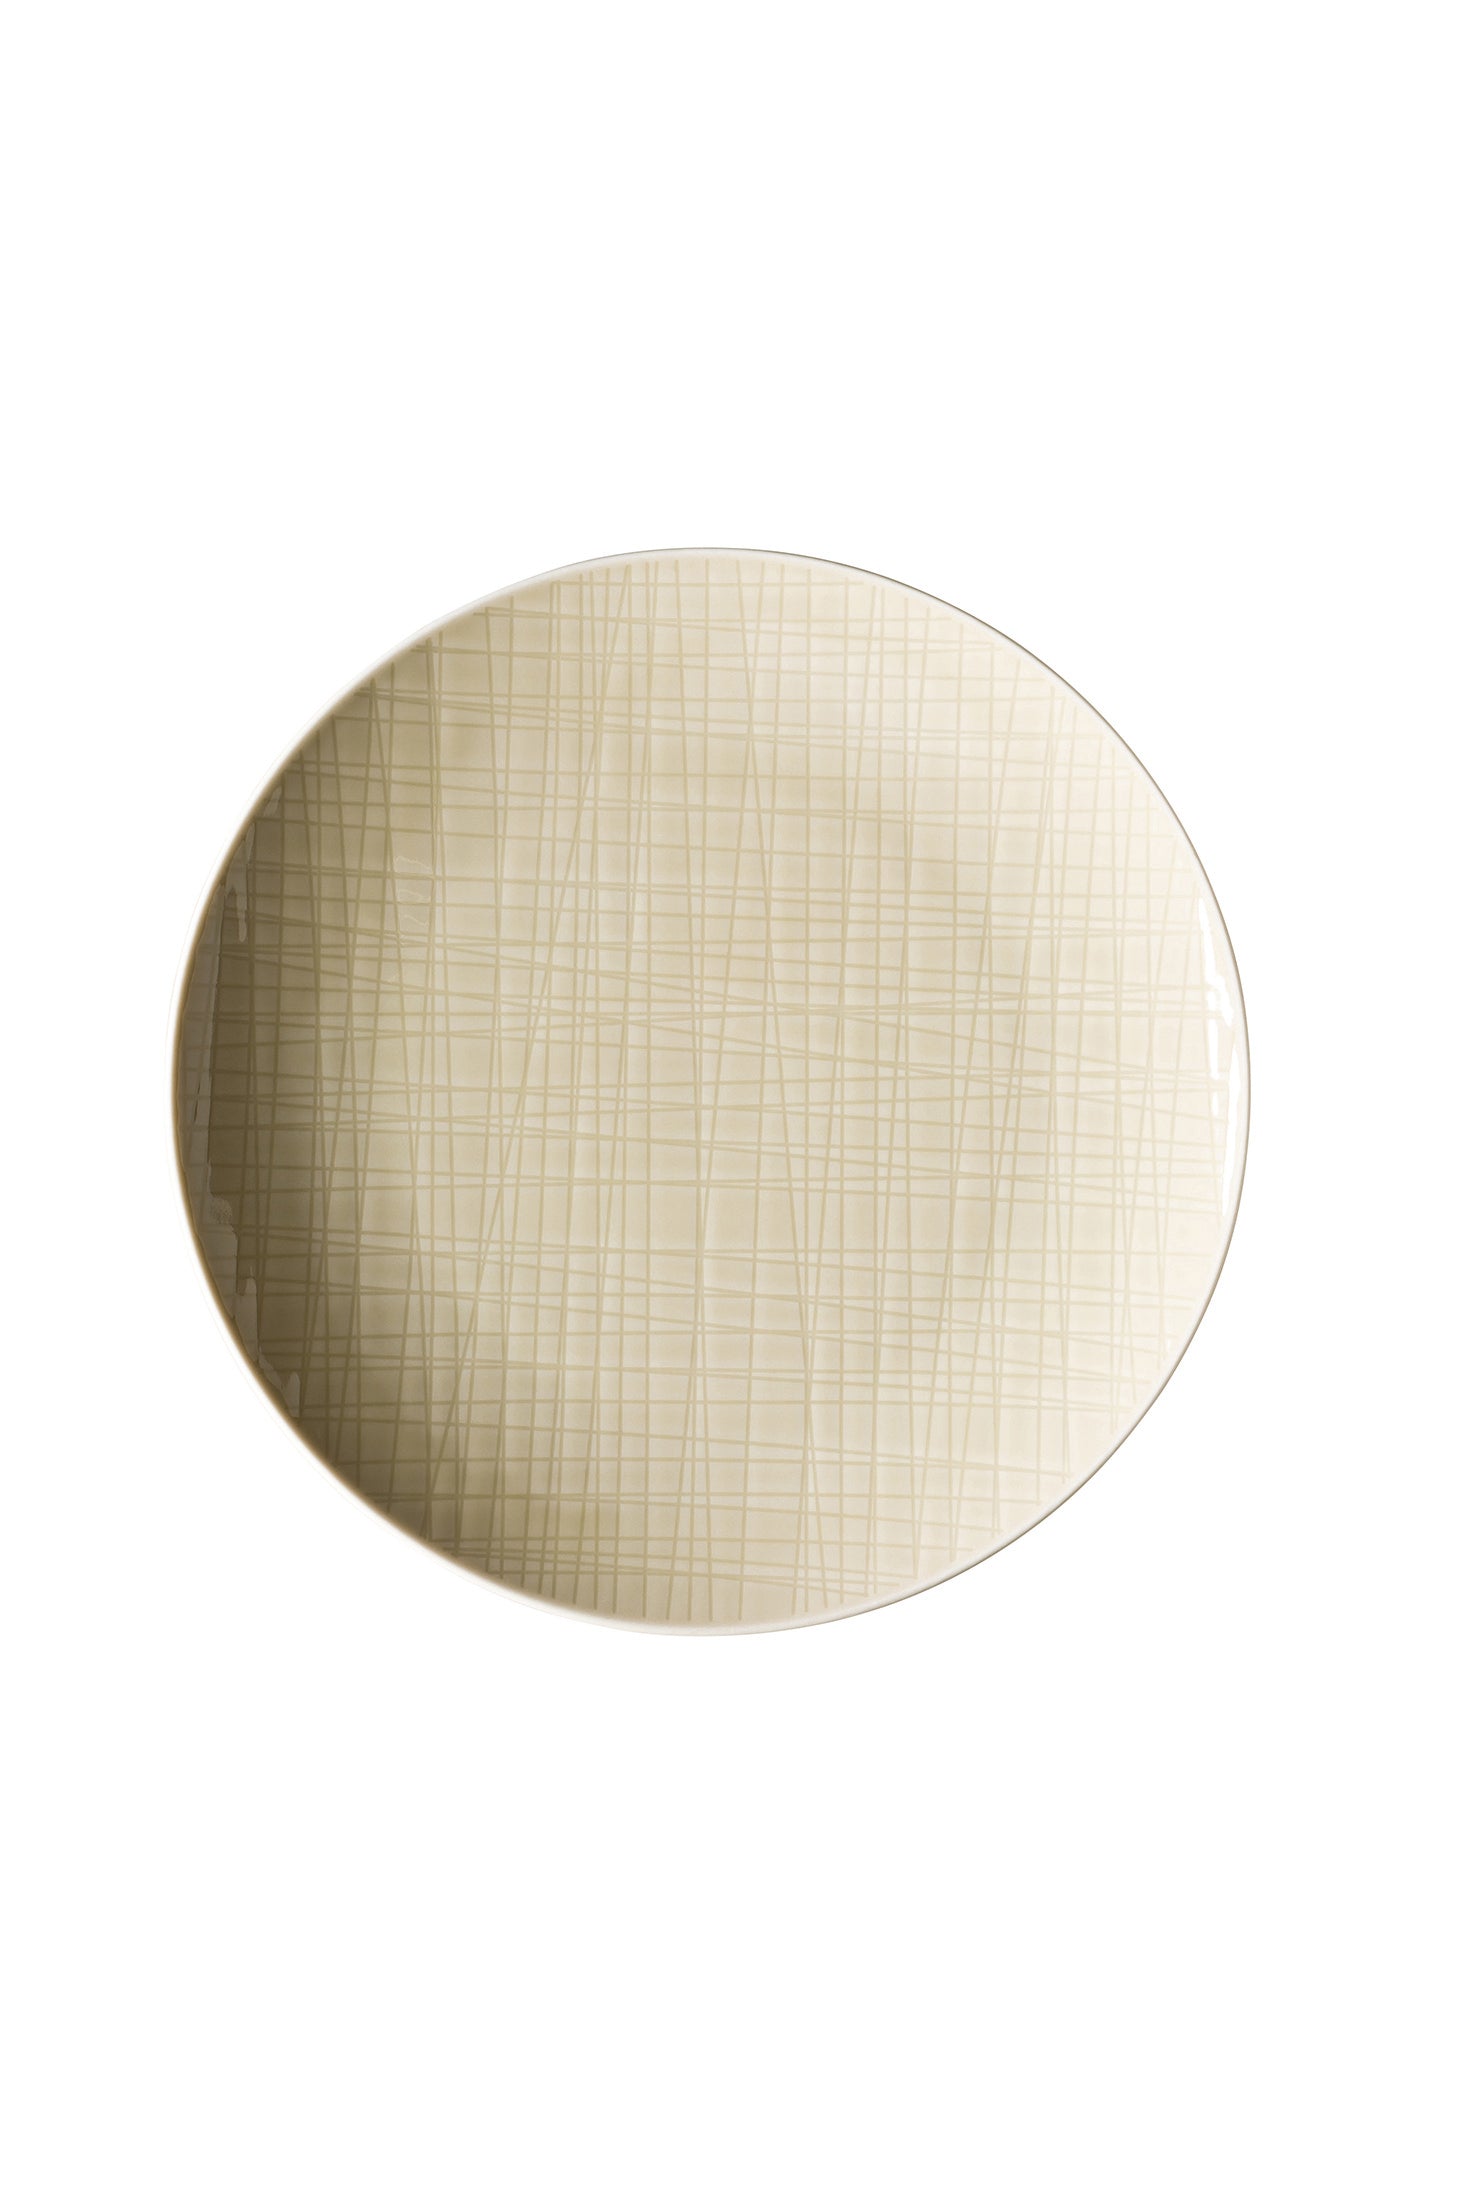 Rosenthal Mesh Cream - Plate Flat Round 8 1/4 in